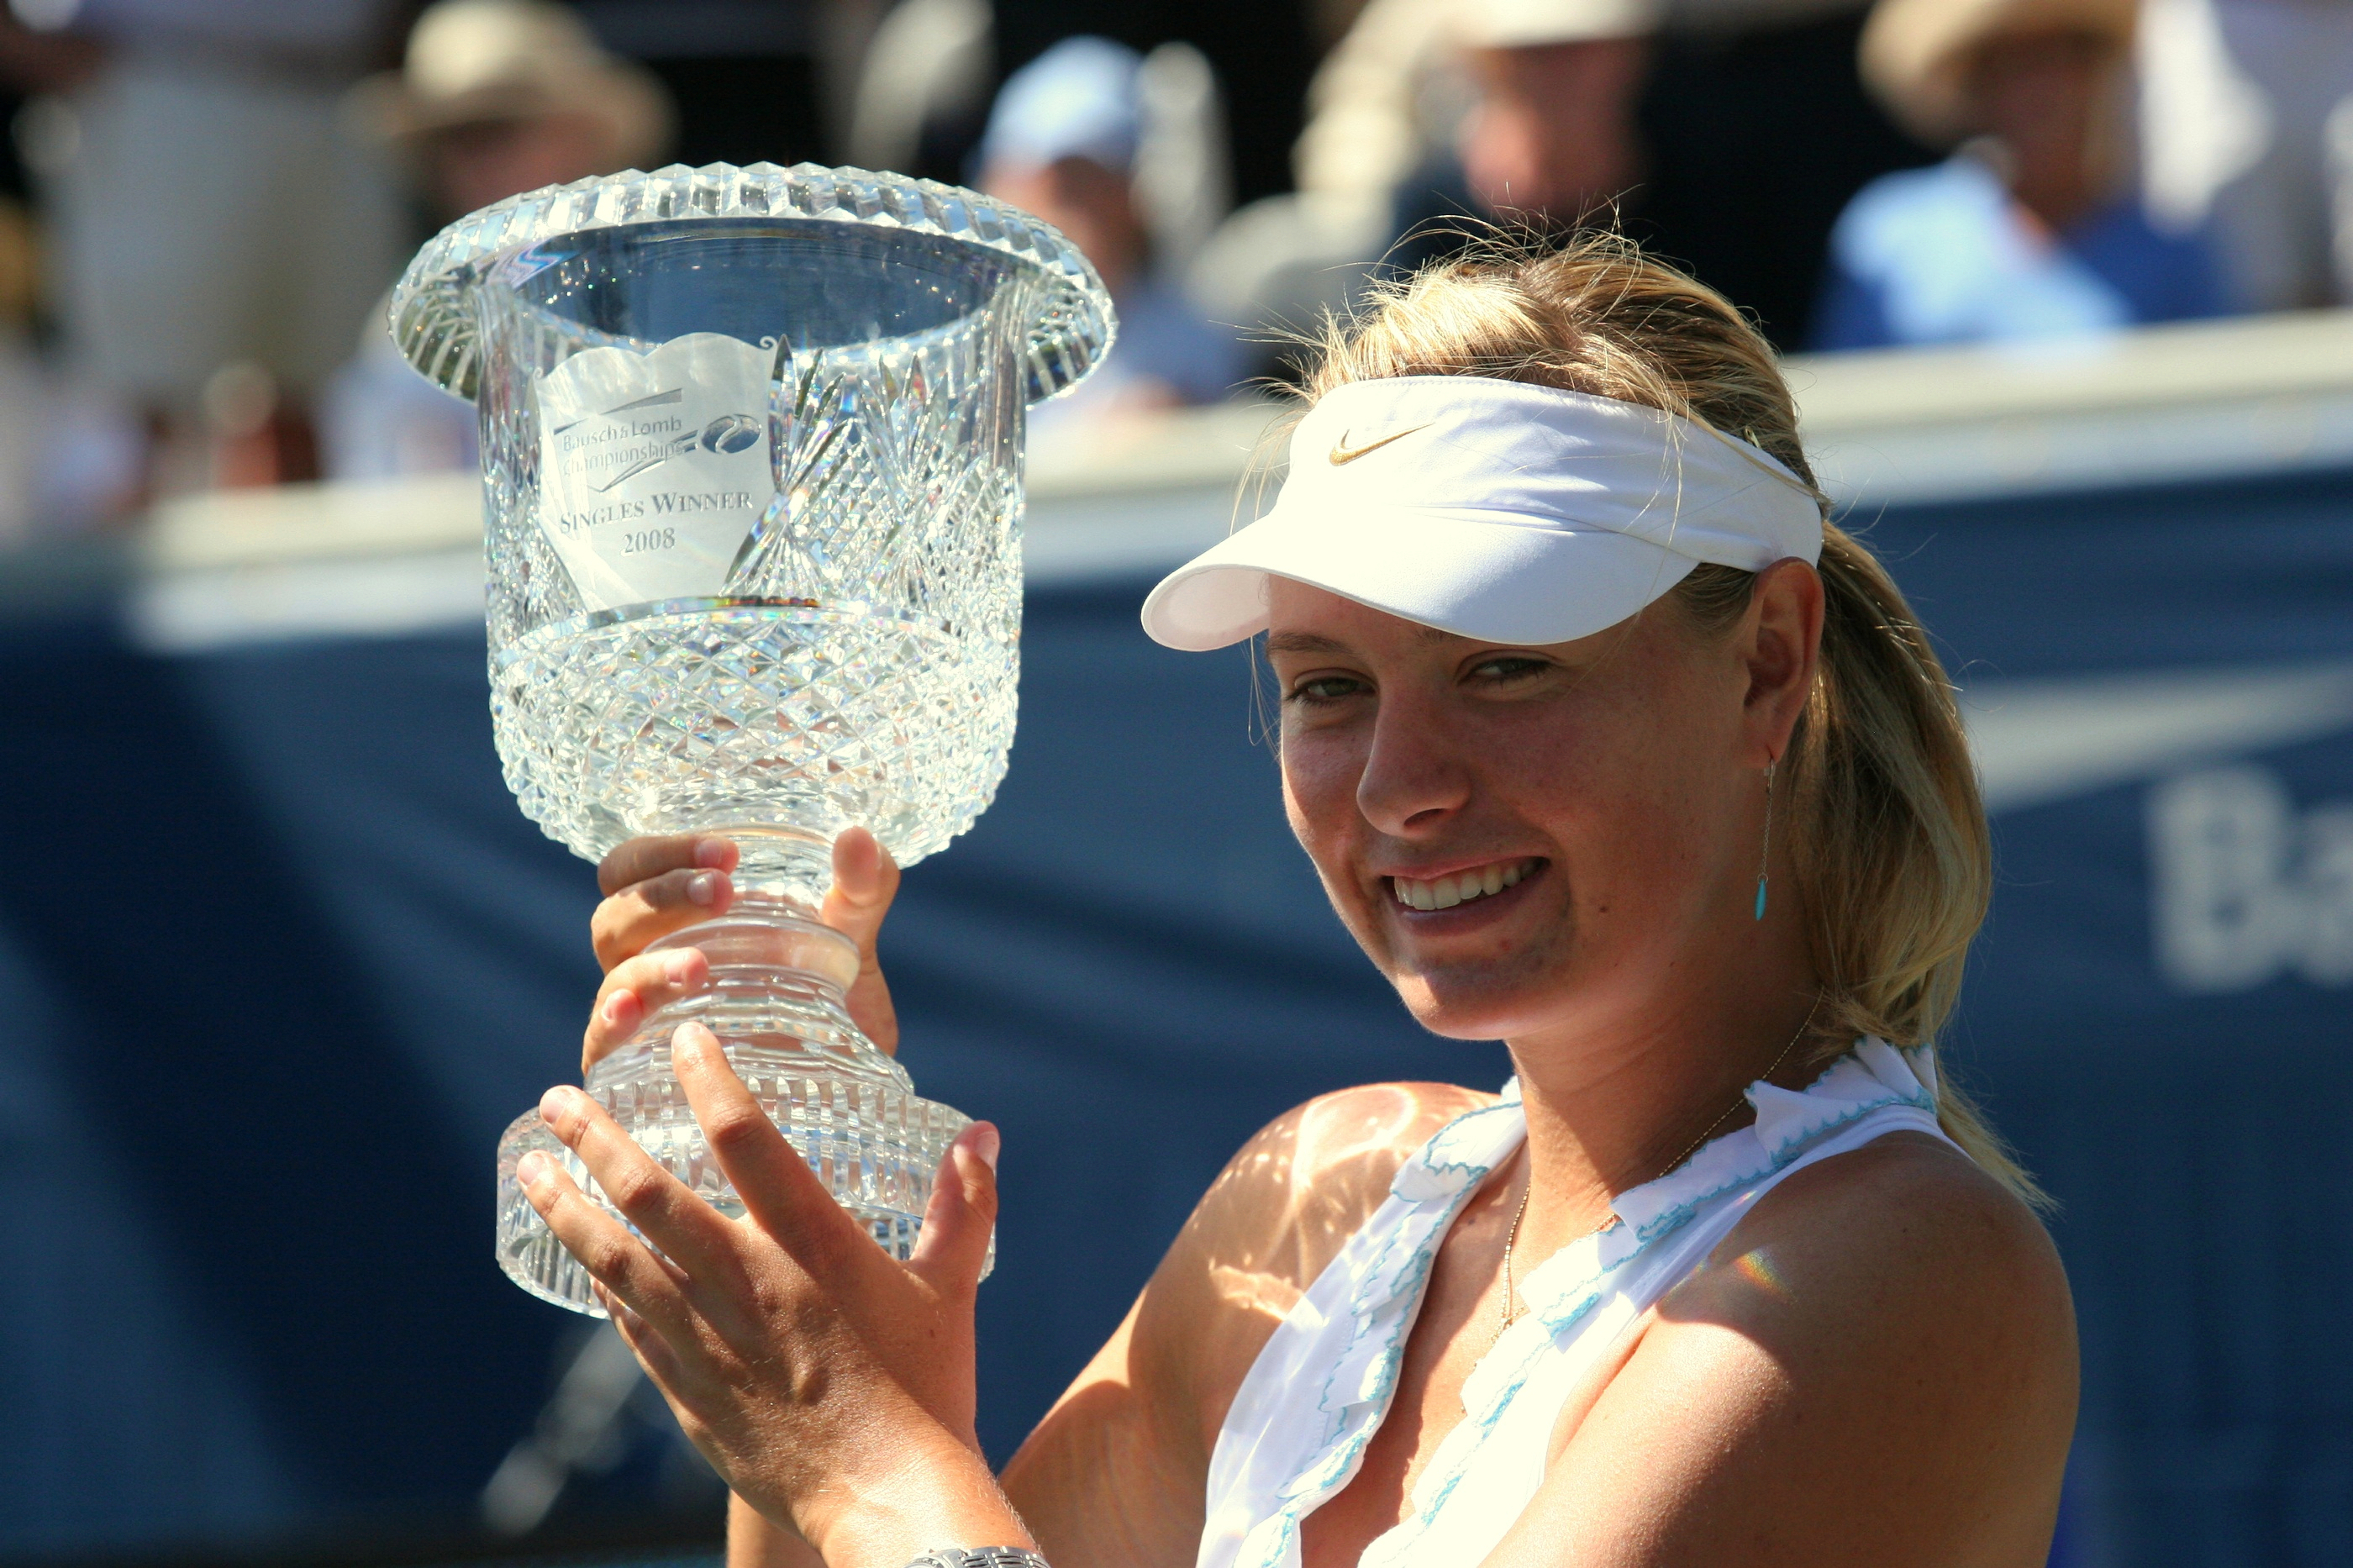 Maria tennis - Wikipedia